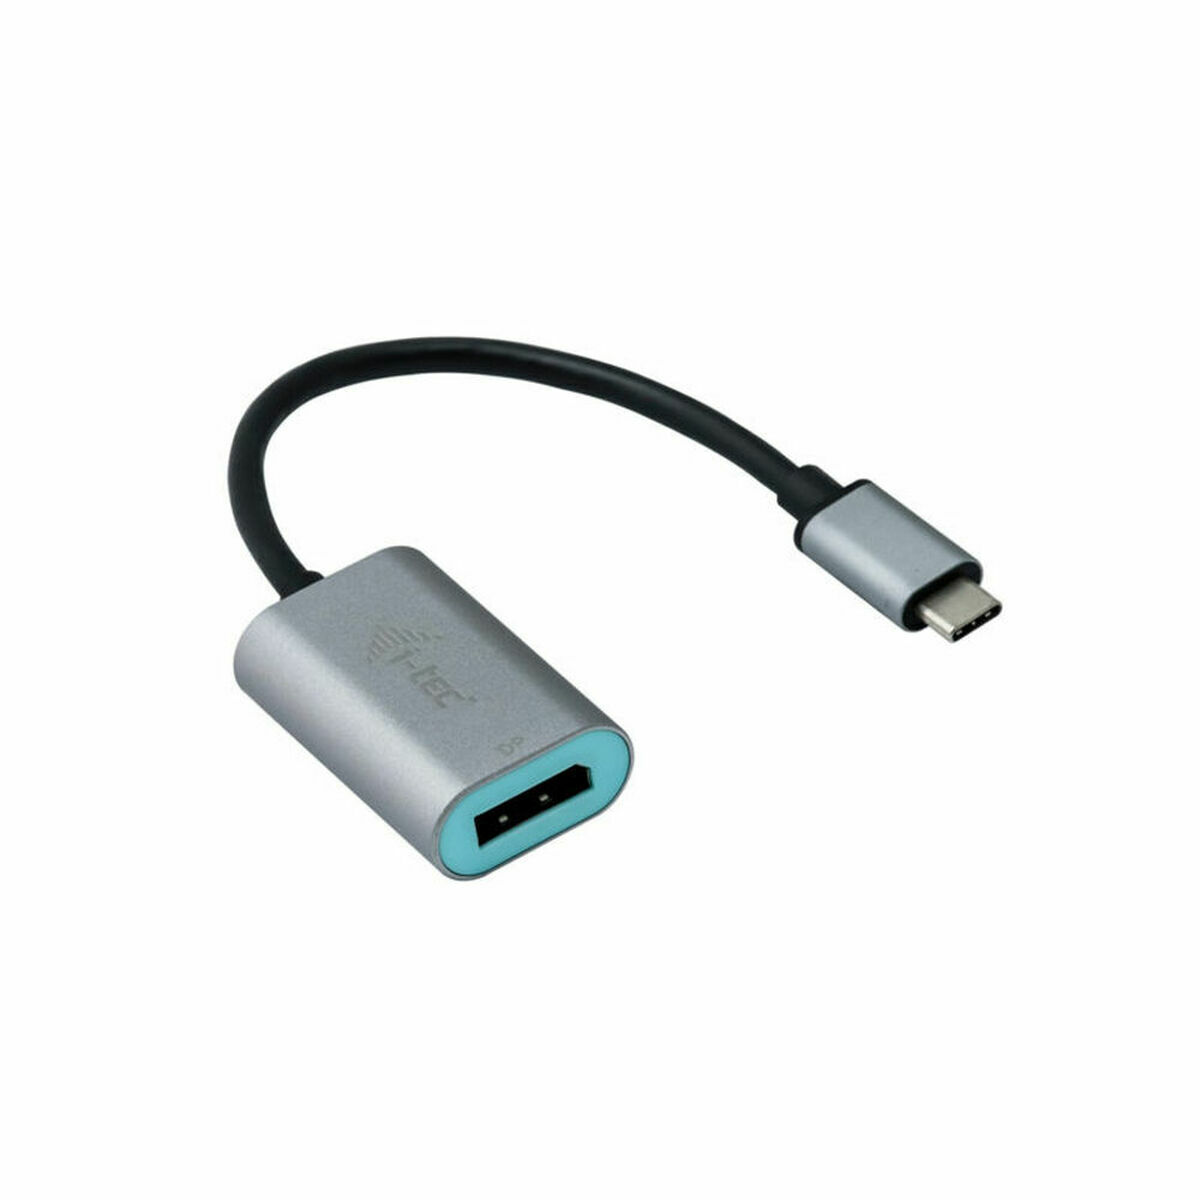 Viikon 31 tarjouksena verkkokaupassamme Korhone: Tietokoneet & Elektroniikka on USB C – DisplayPort Adapteri i-Tec C31METALDP60HZ 150 cm Harmaa